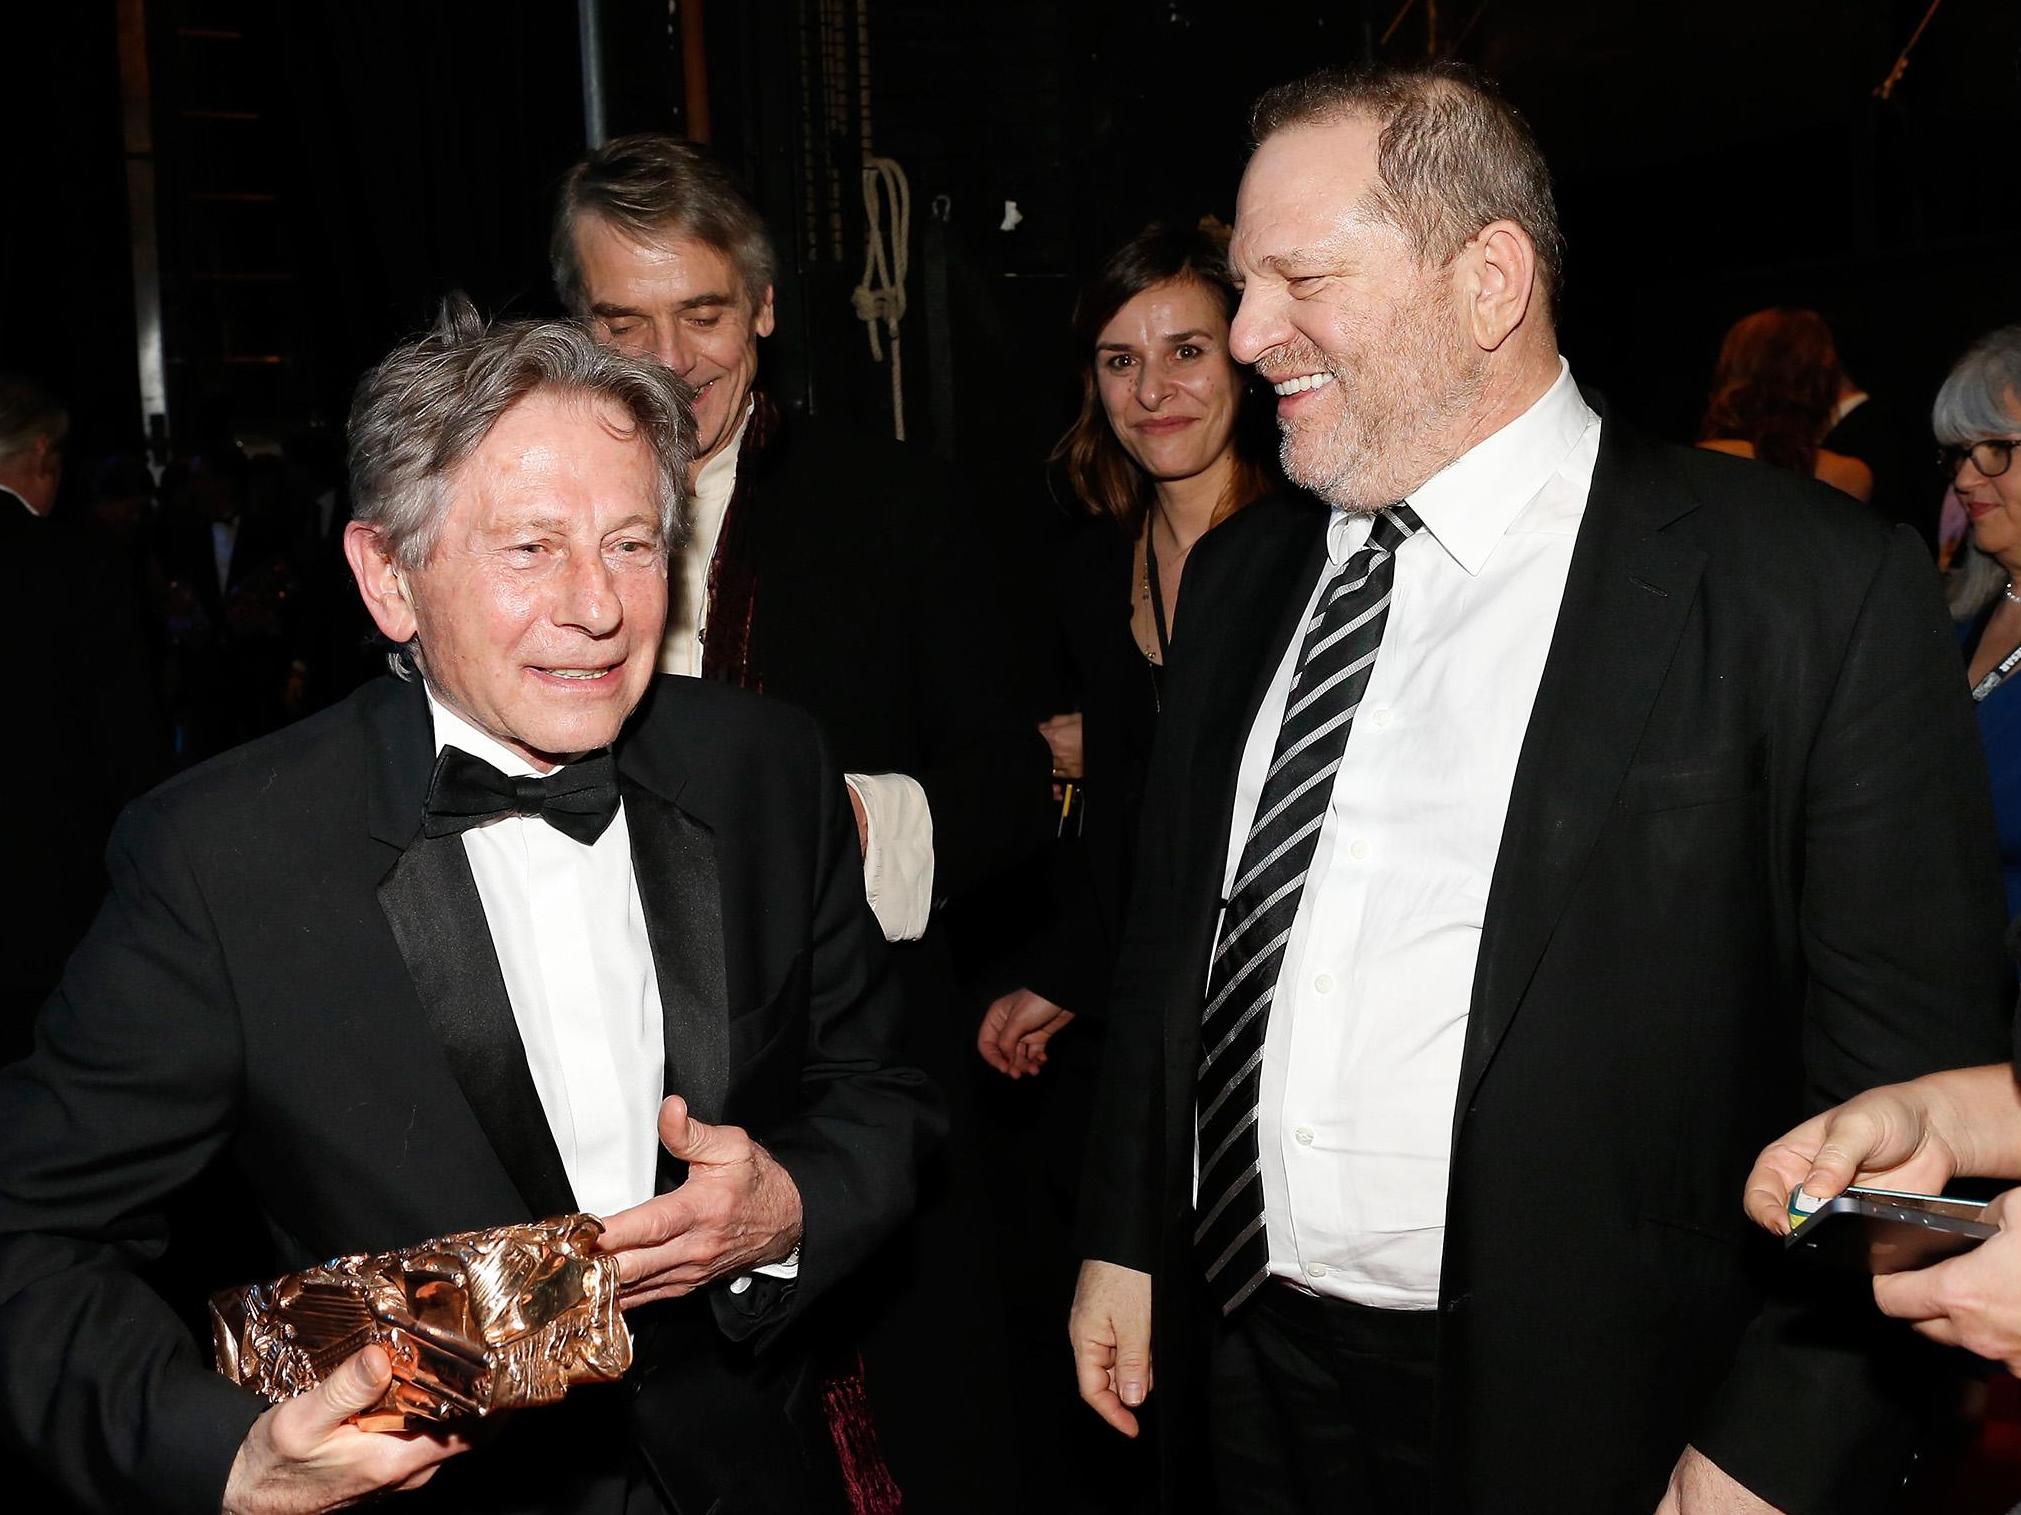 Disgraced Roman Polanski with expelled film producer Harvey Weinstein